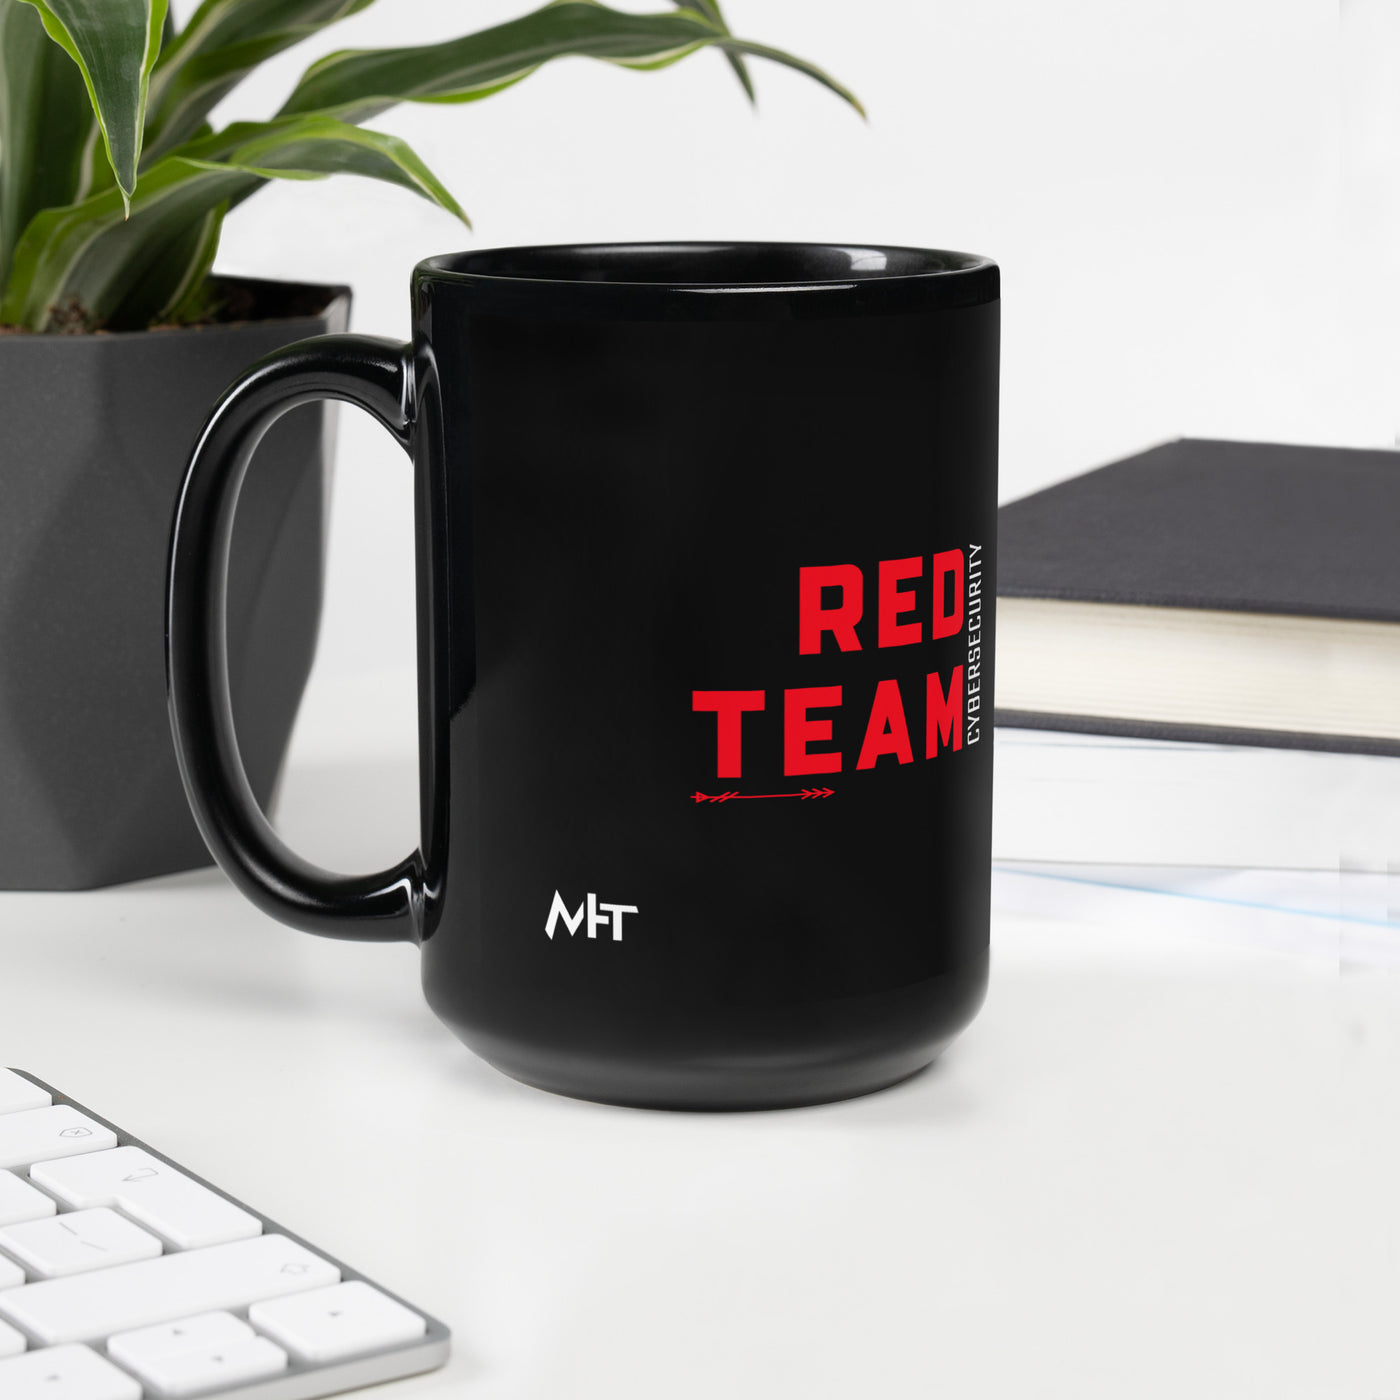 Cyber Security Red Team V8 - Black Glossy Mug